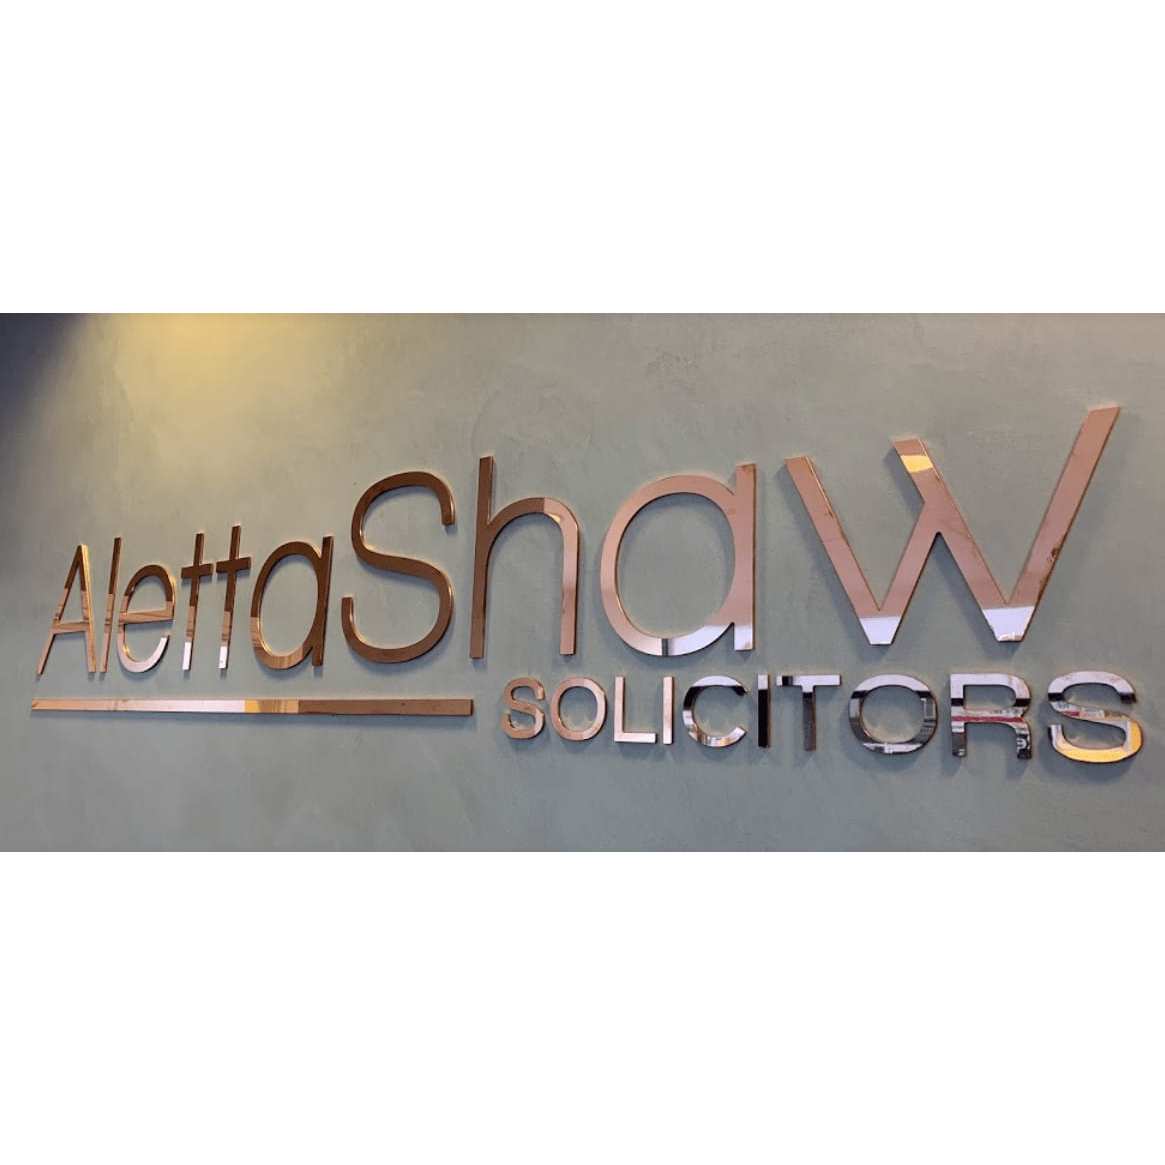 Aletta Shaw Solicitors - Orpington, London BR5 1EF - 01689 422420 | ShowMeLocal.com